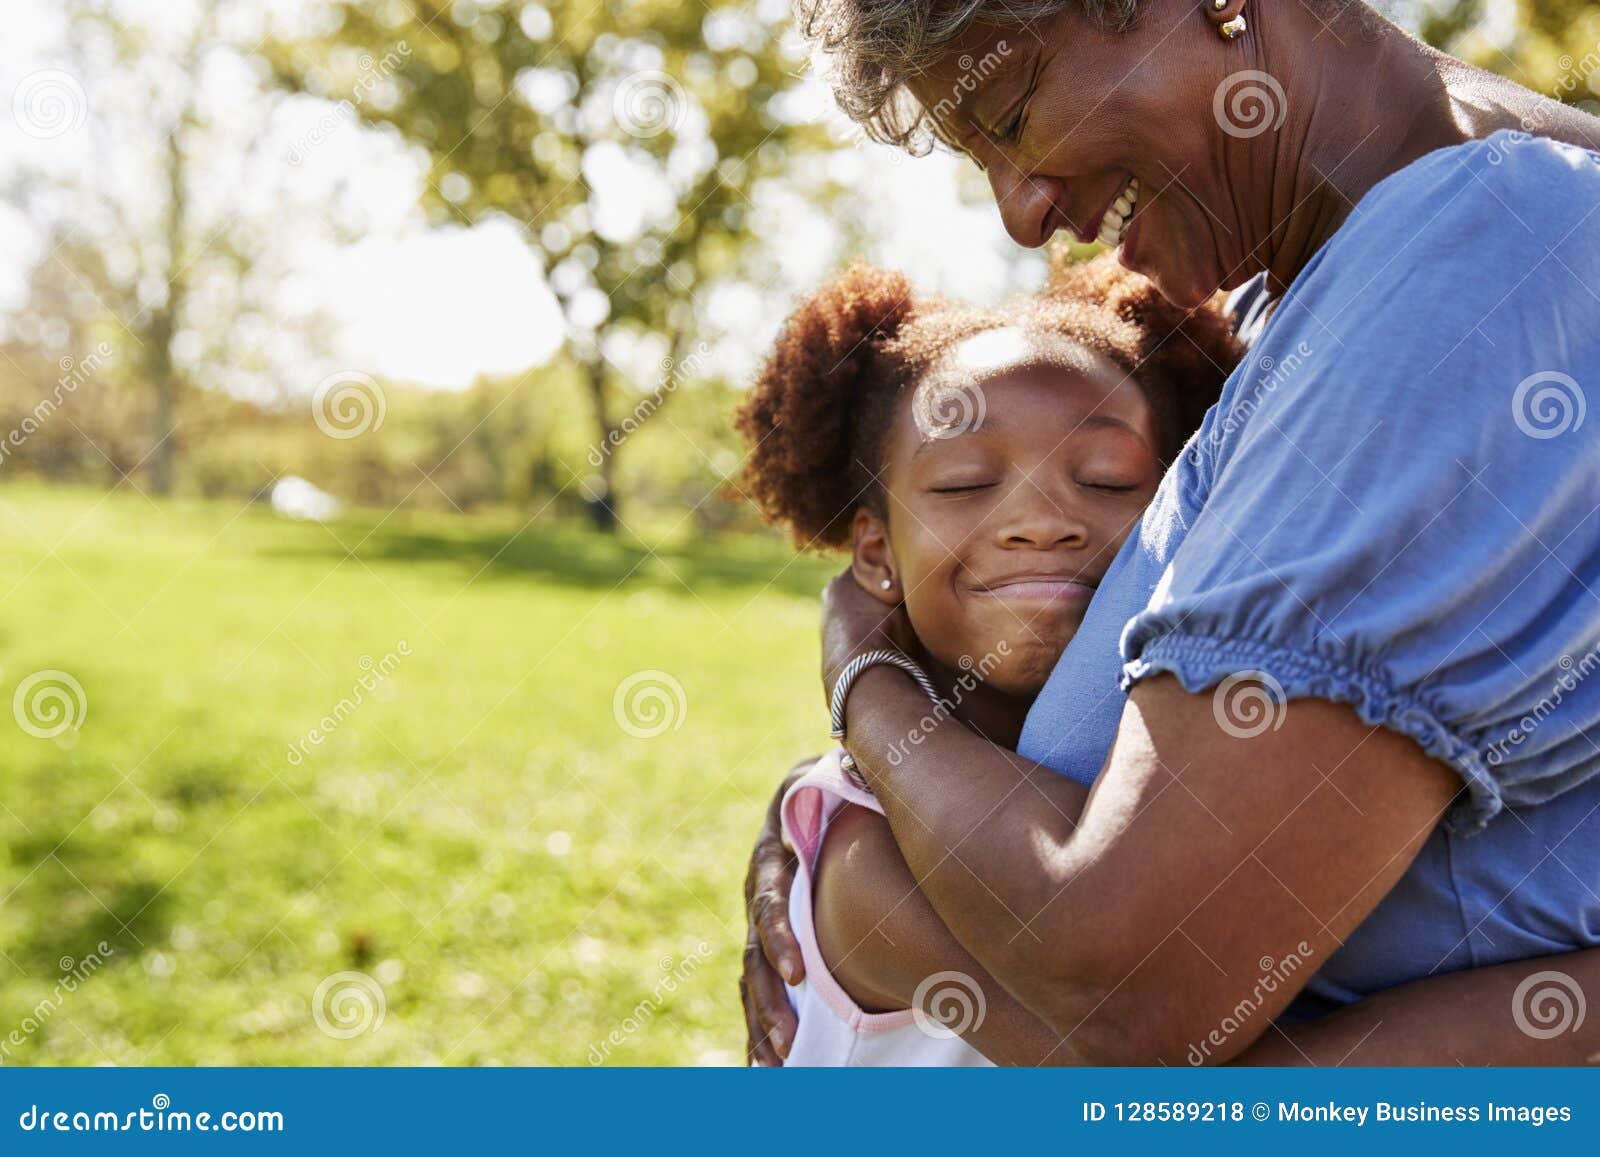 close up of granddaughter hugging grandmother in park